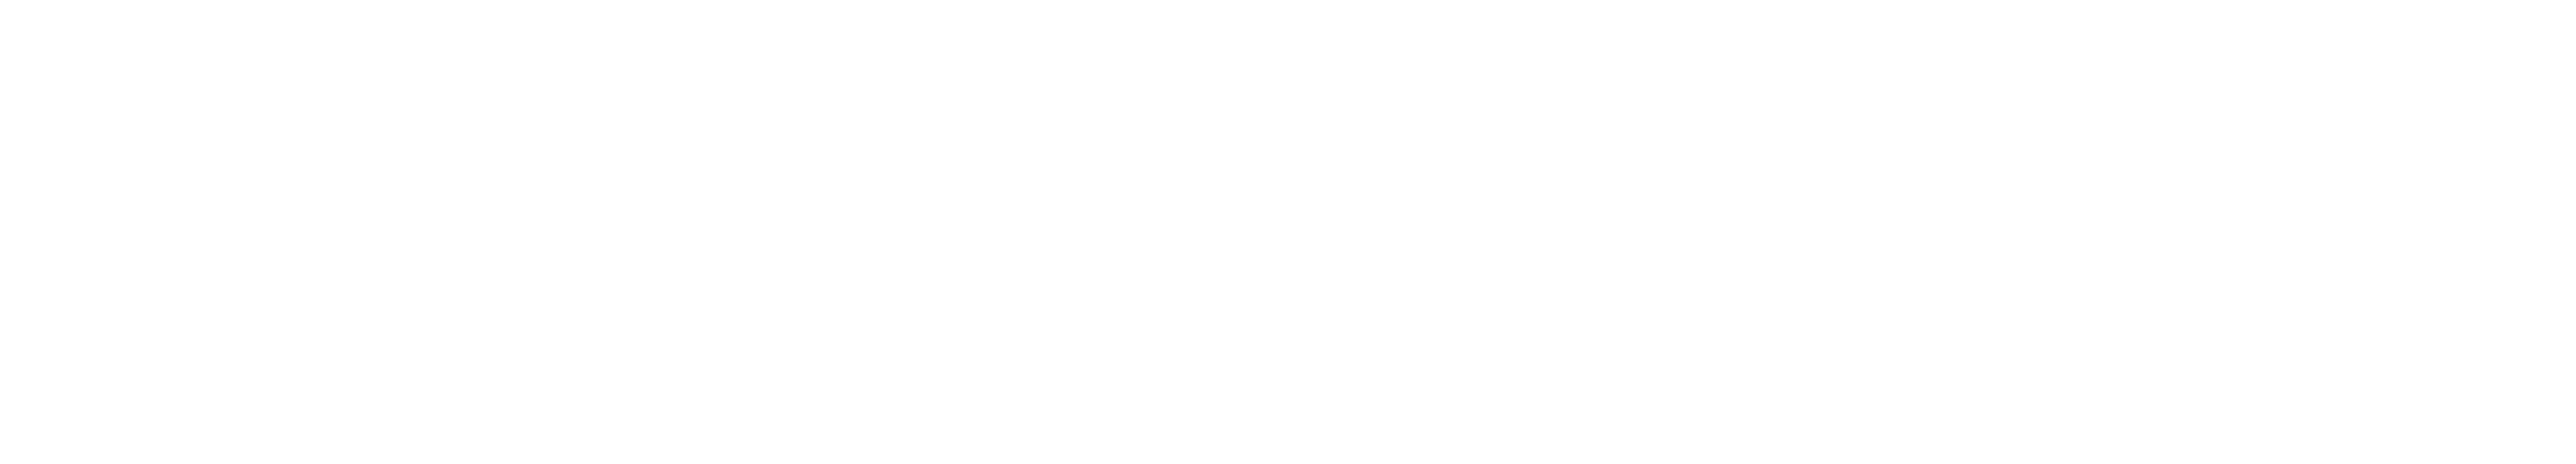 Logo - Snowplow - Snowflake